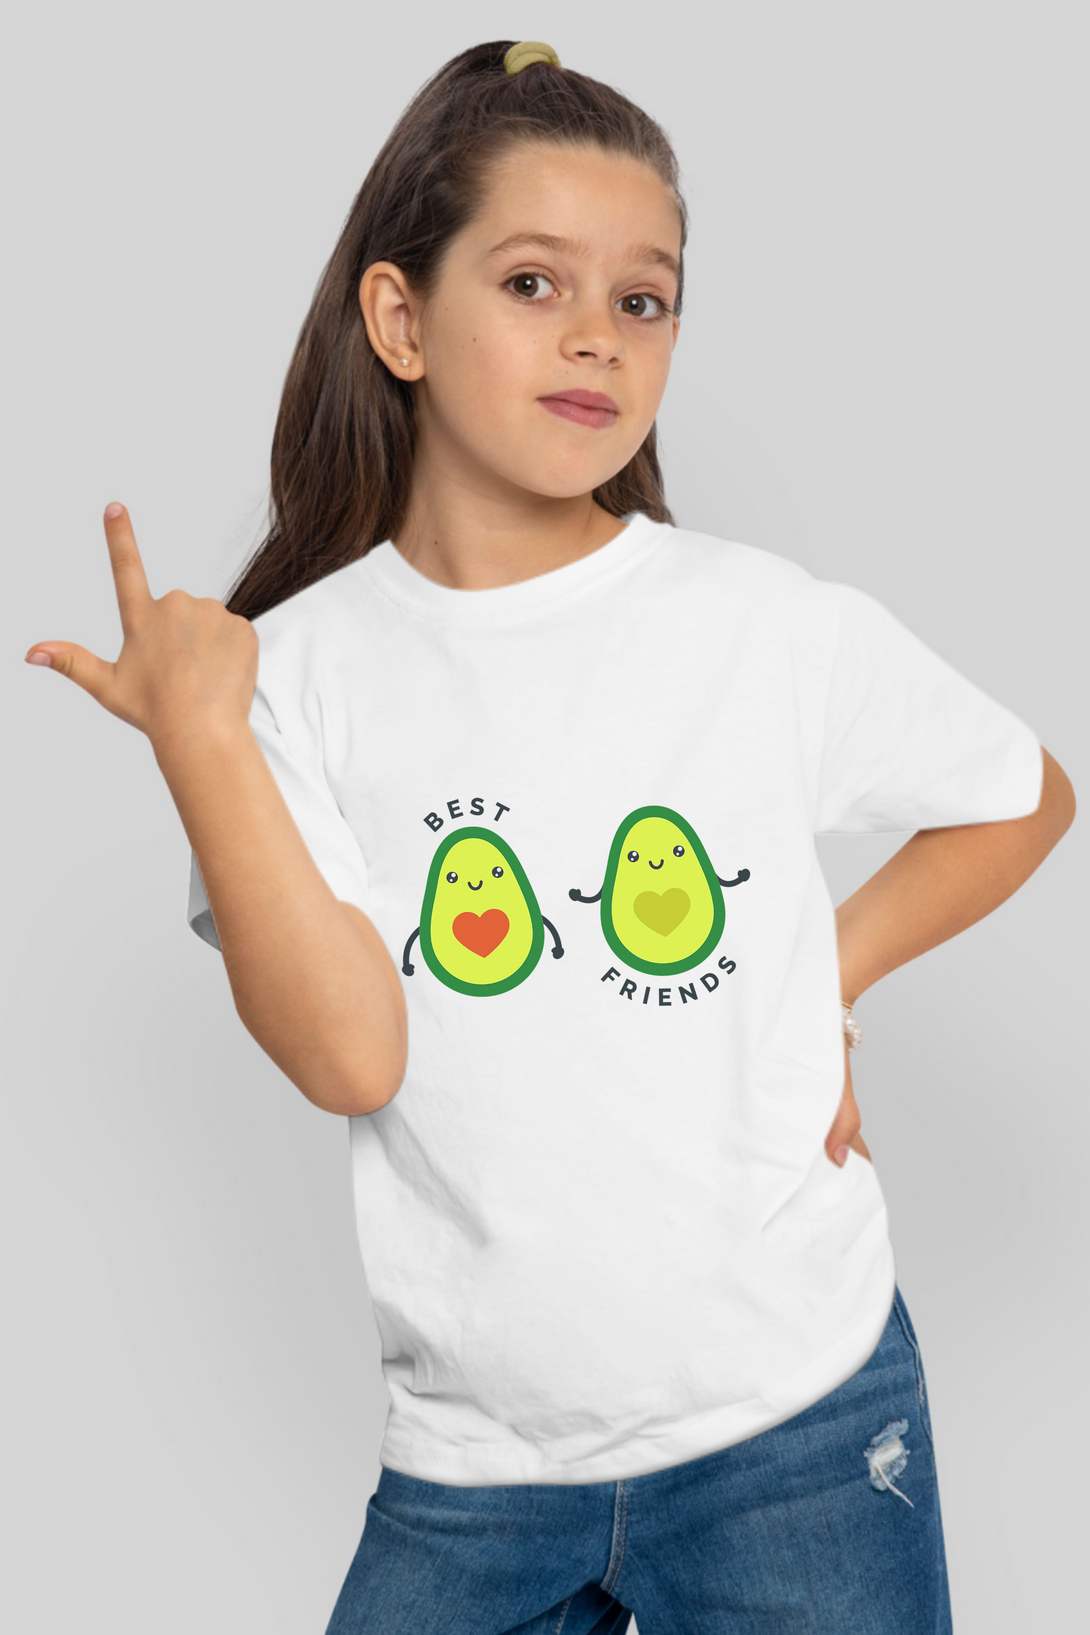 Avocado Friends Printed T-Shirt For Girl - WowWaves - 6